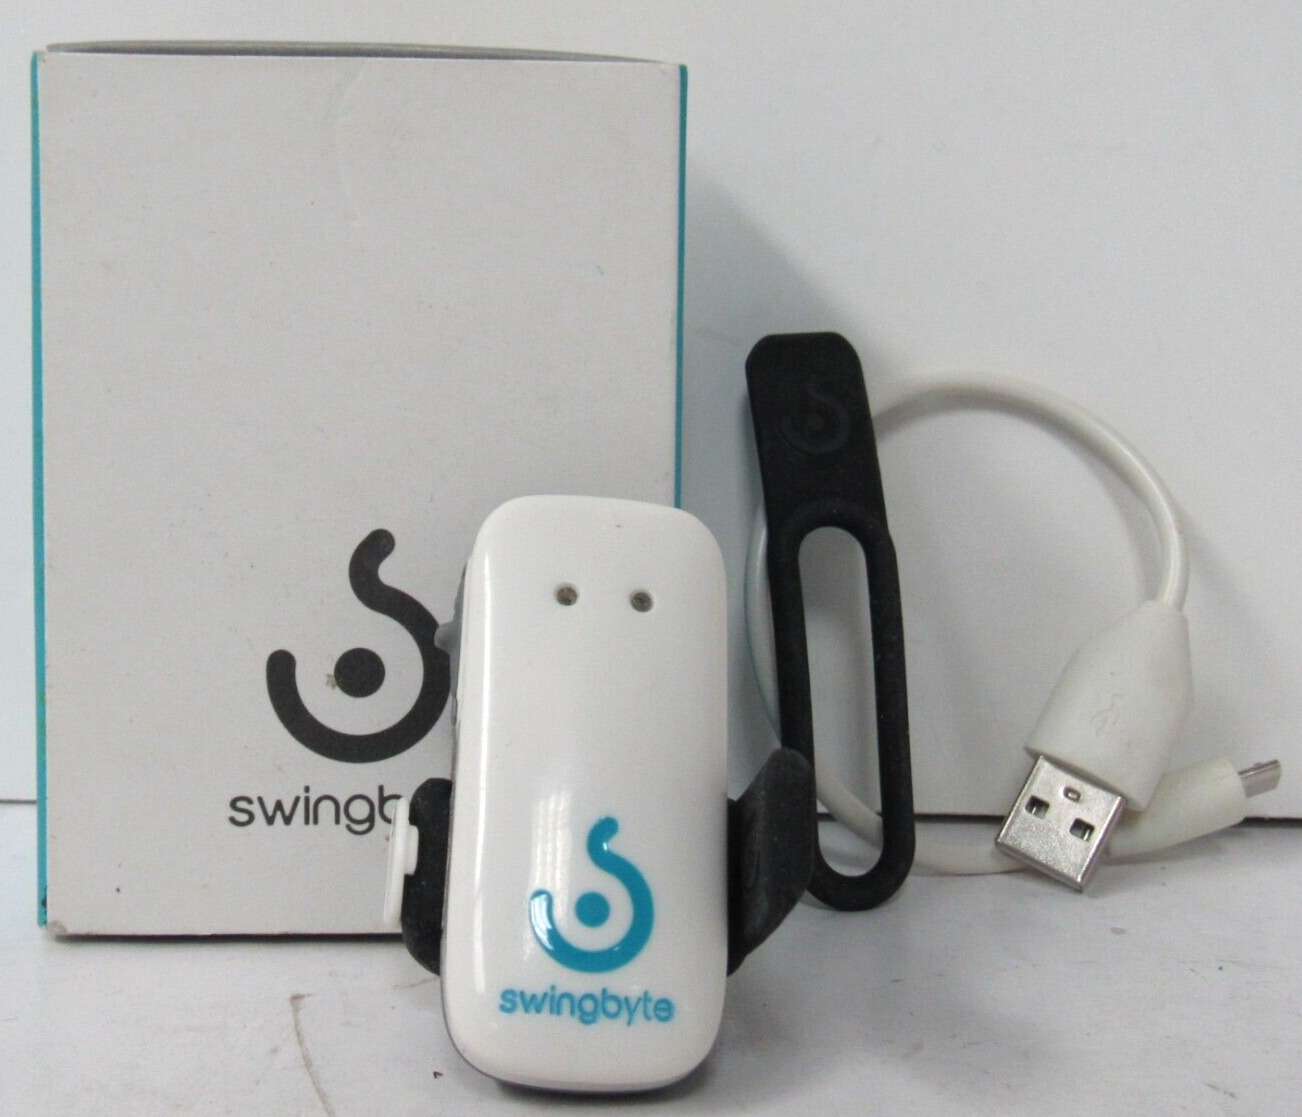 Swingbyte Mobile Golf Swing Analyzer Gen 1 + Original Box (untested)